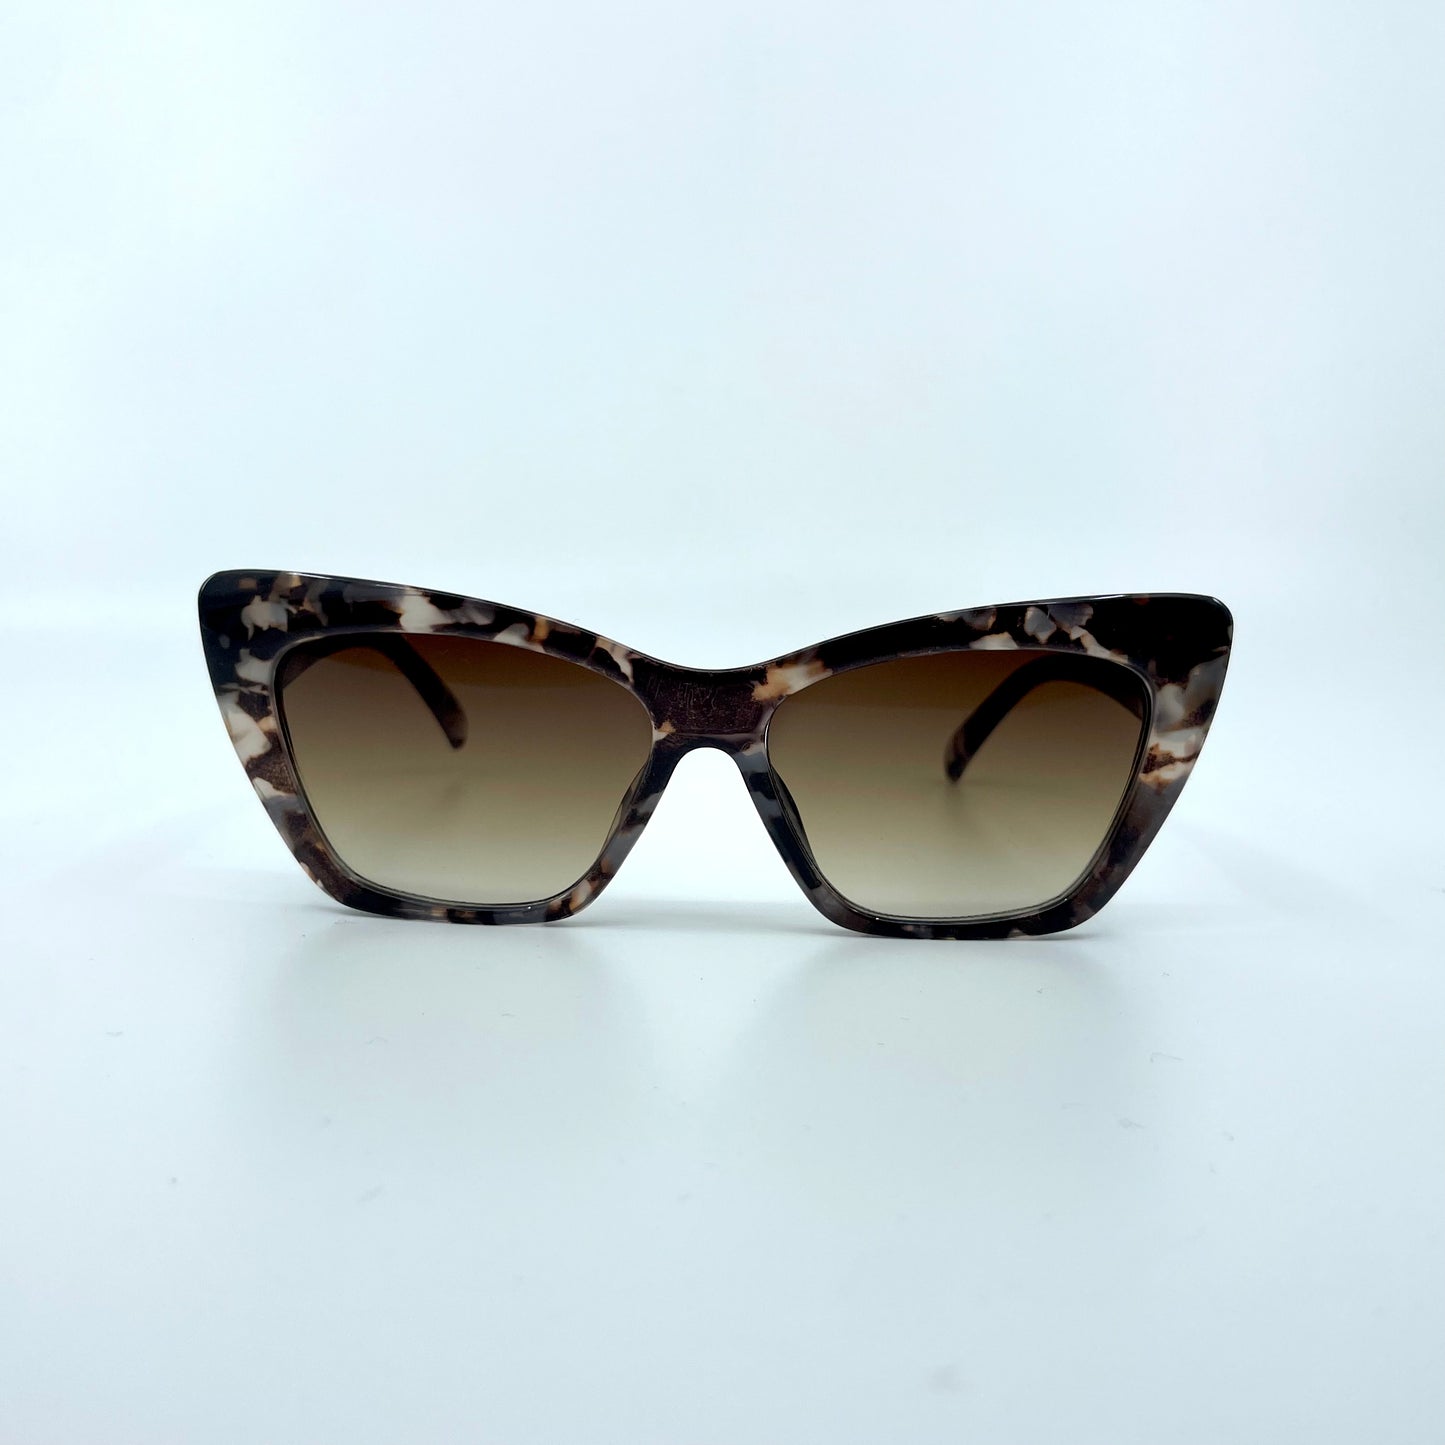 "Purr" Cat-eye Sunglasses